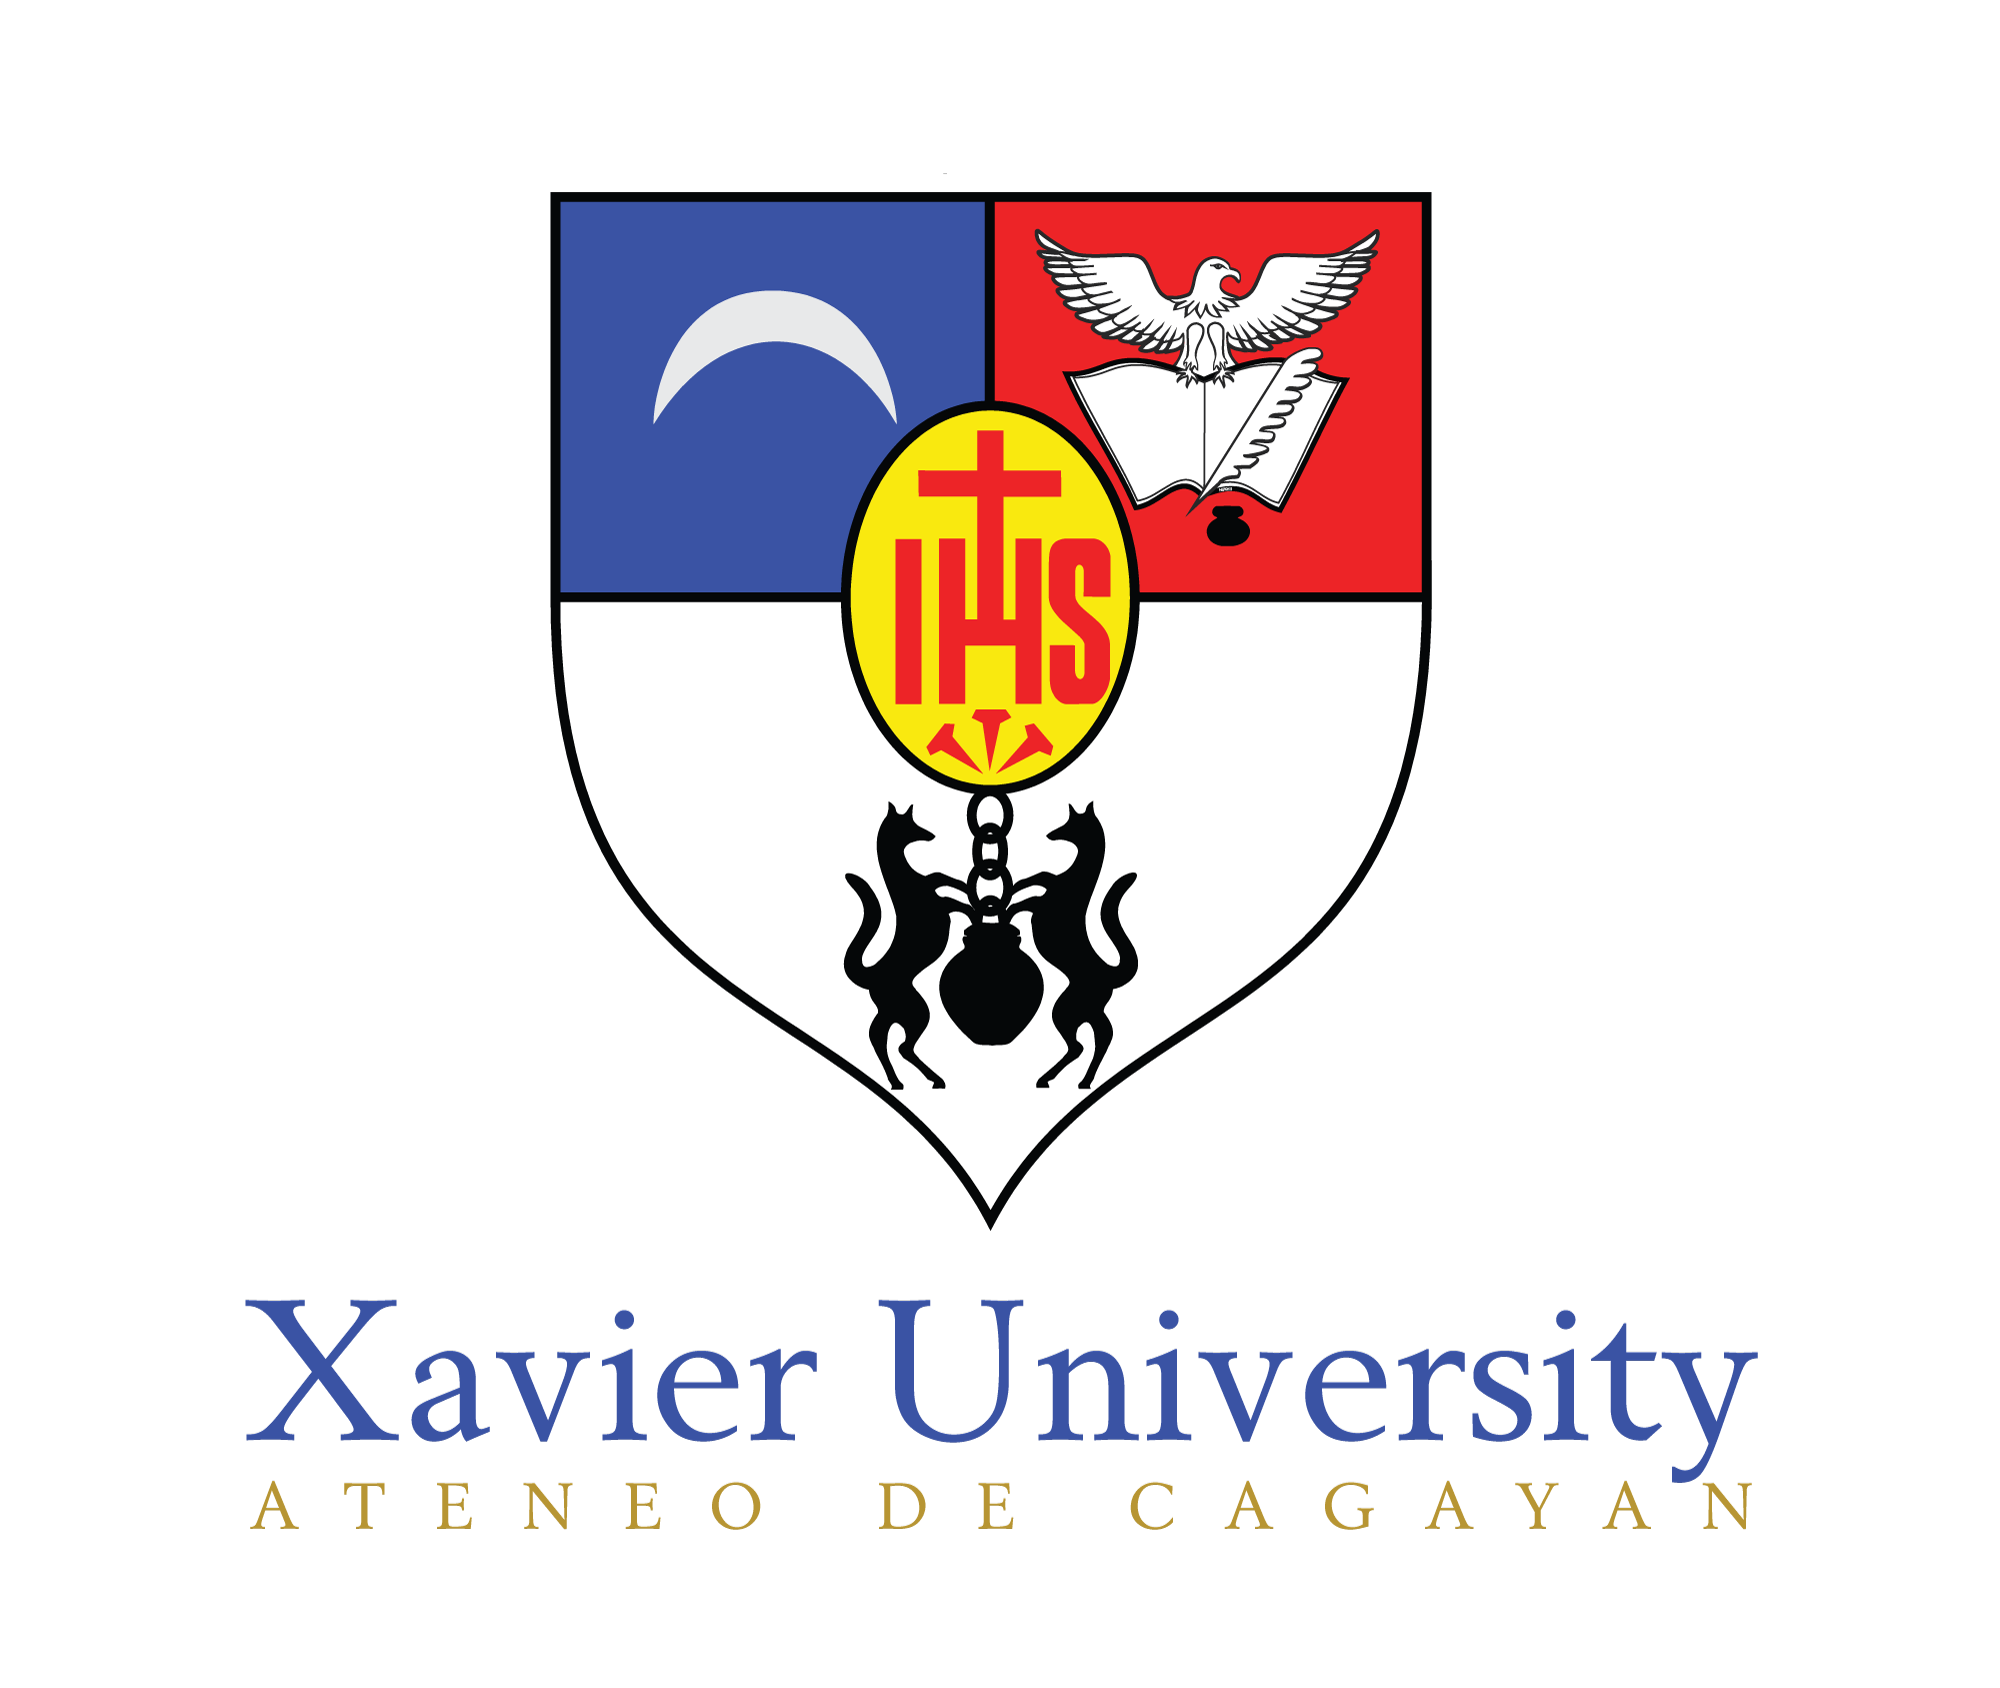 XU logo type ver 2